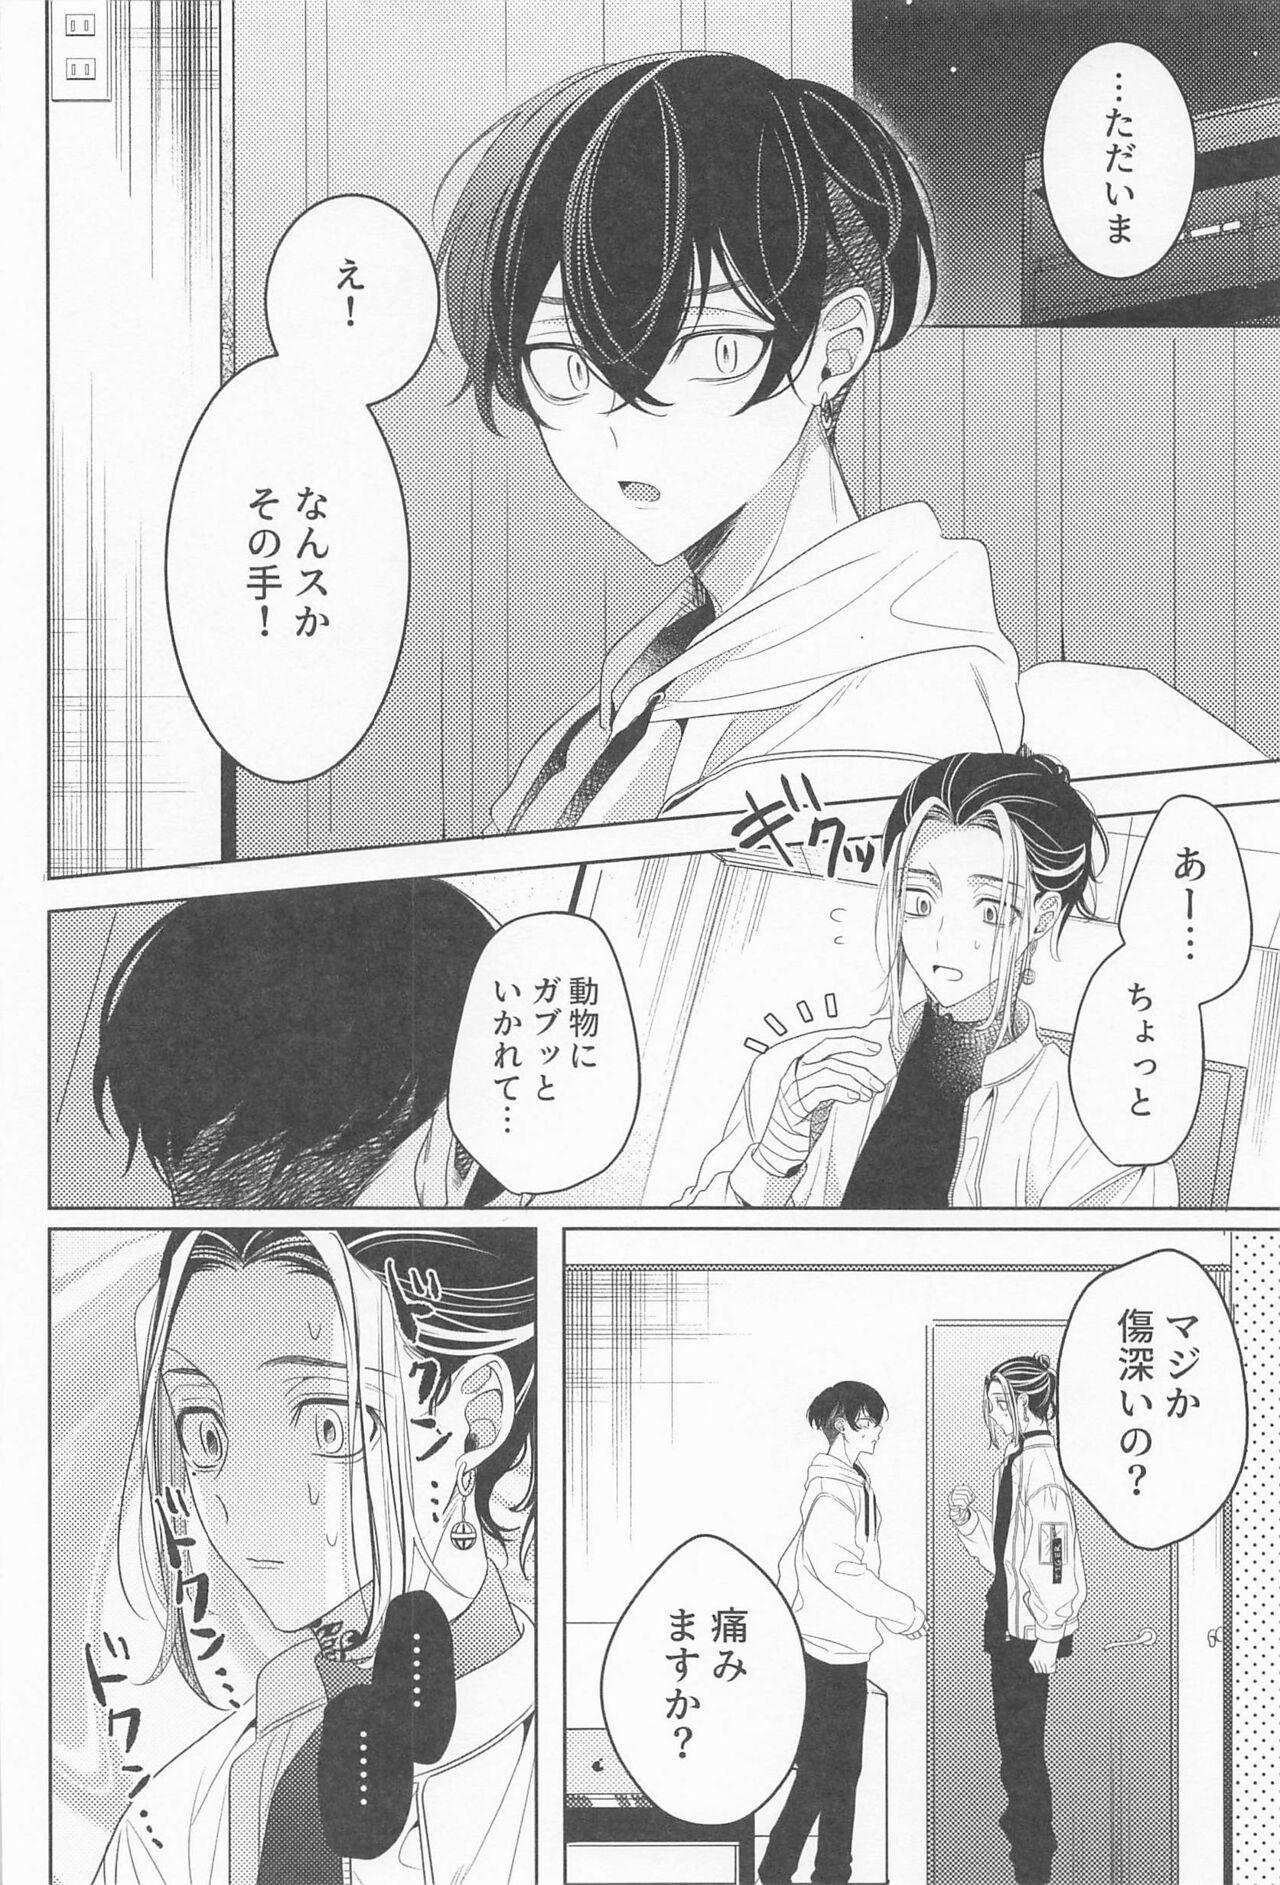 Her sukidakarashimpaishite - Tokyo revengers Highschool - Page 7